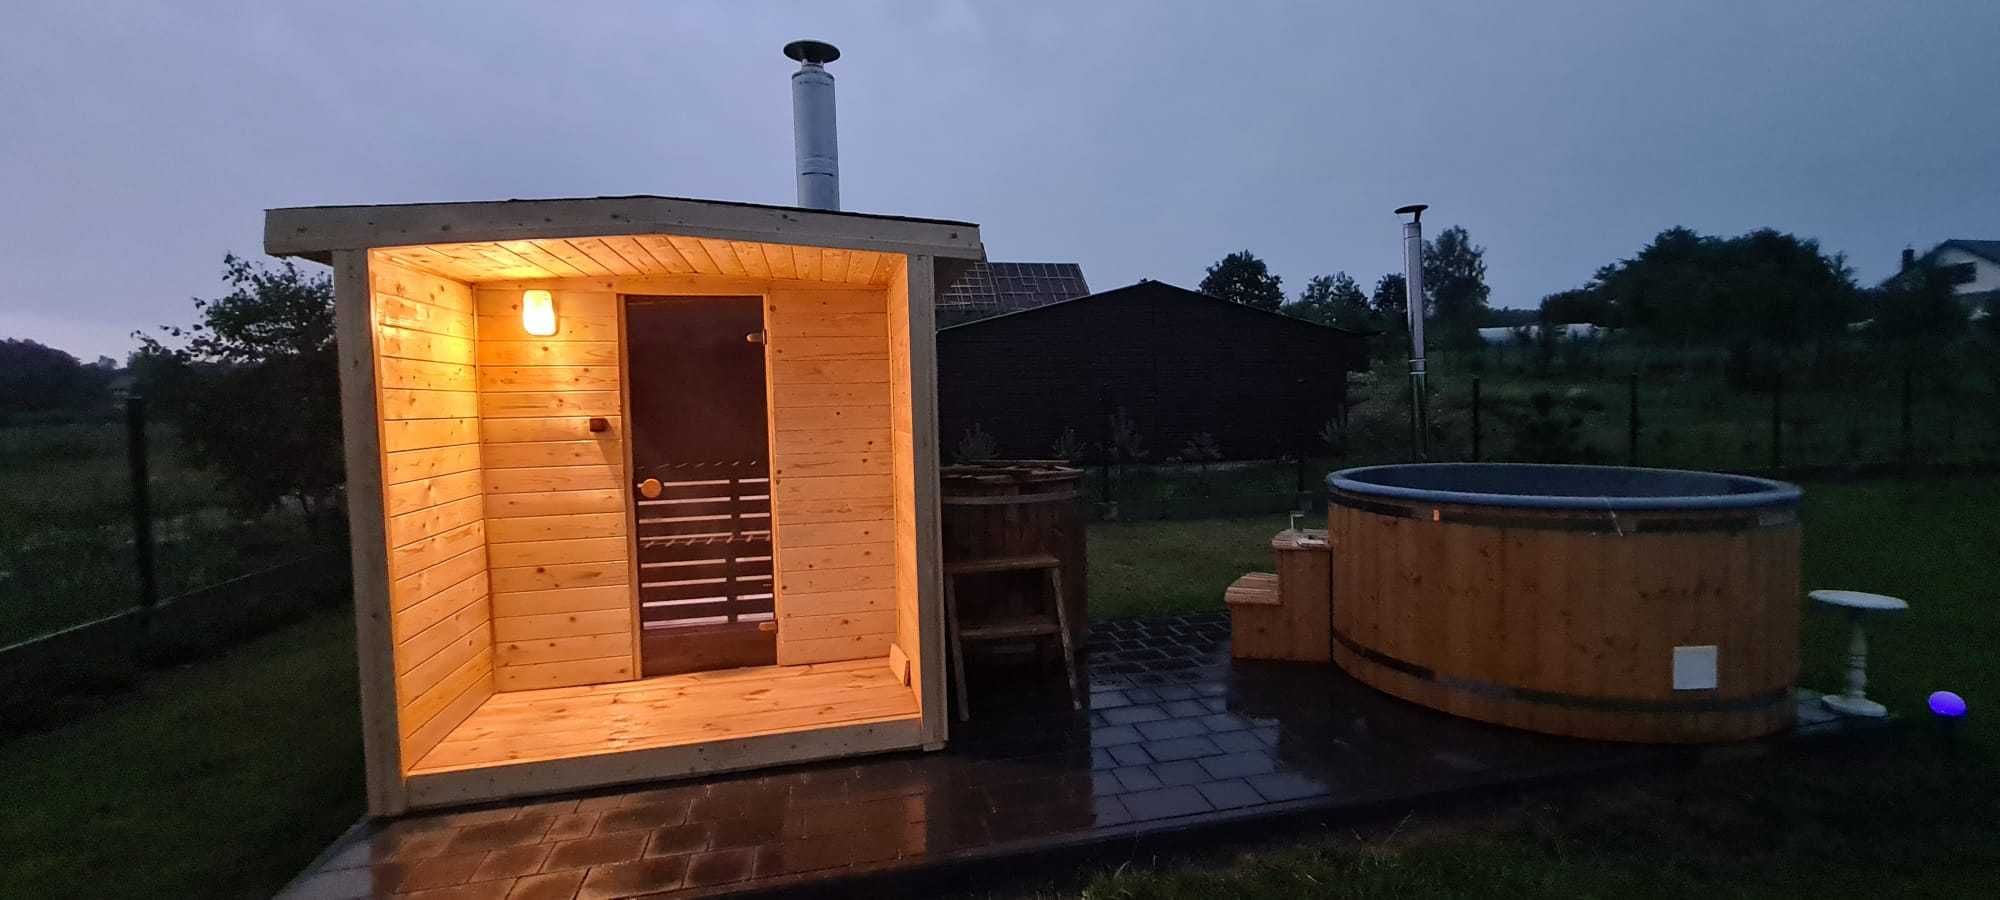 Sauna ogrodowa domek 3,0 m x 2,0m, ocieplona, producent. PROMOCJA!